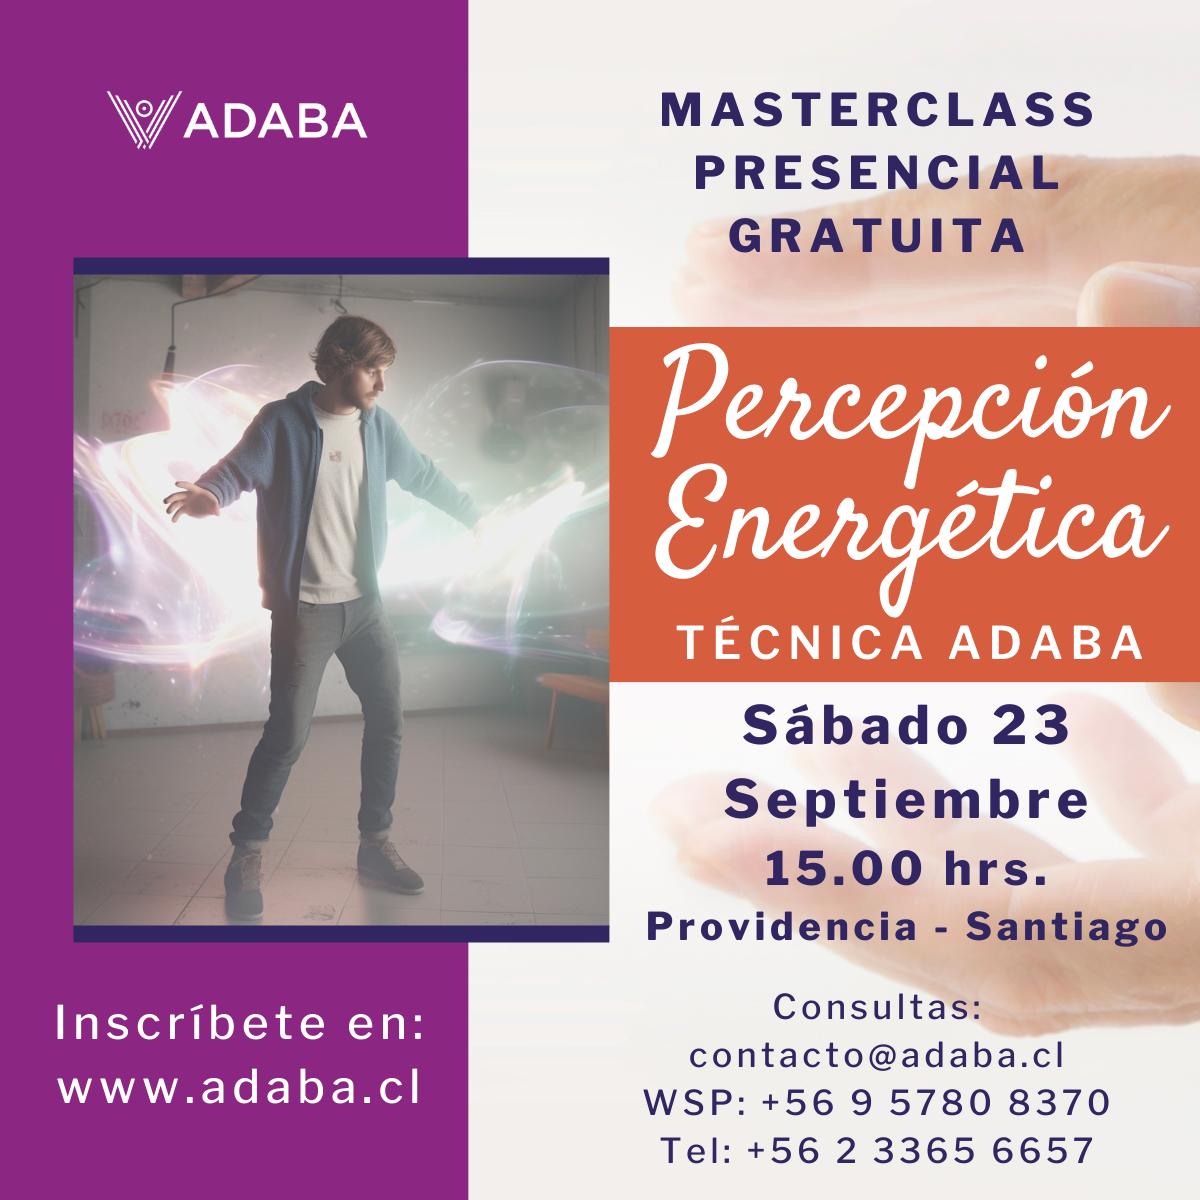 Masterclass Presencial Gratuita - Percepción Energética Técnica ADABA ✨- 23 Septiembre